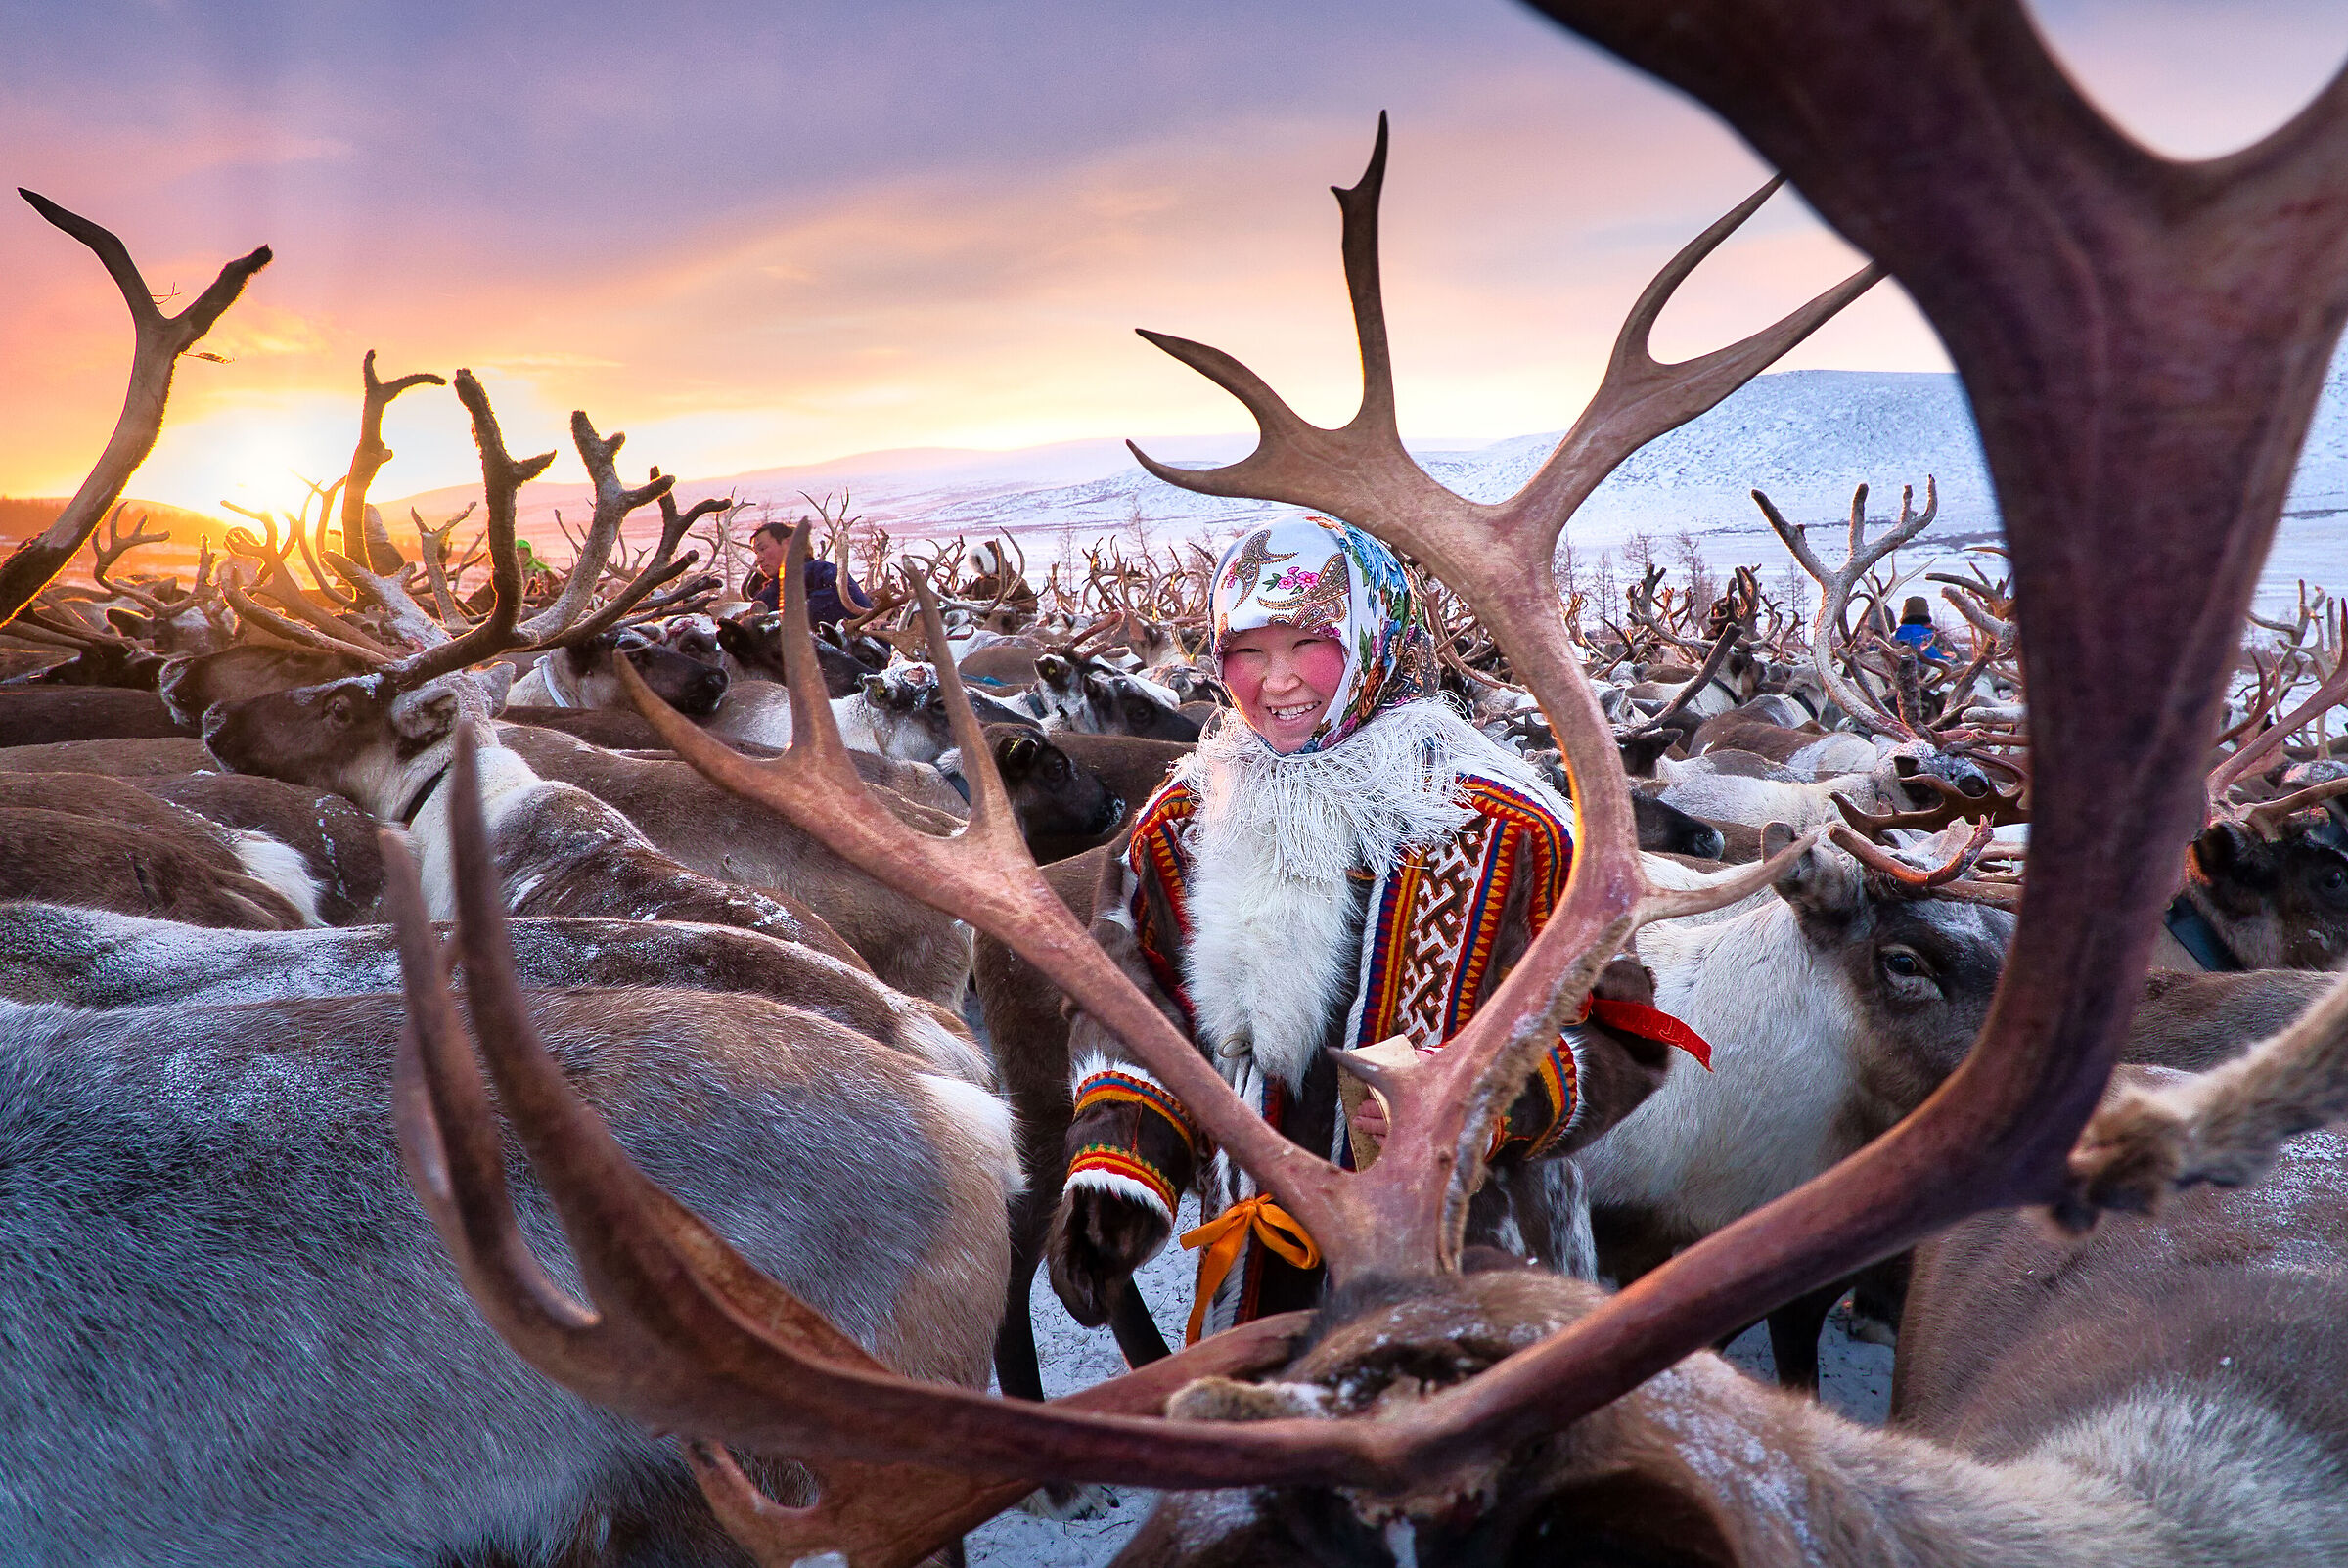 Among the reindeer...